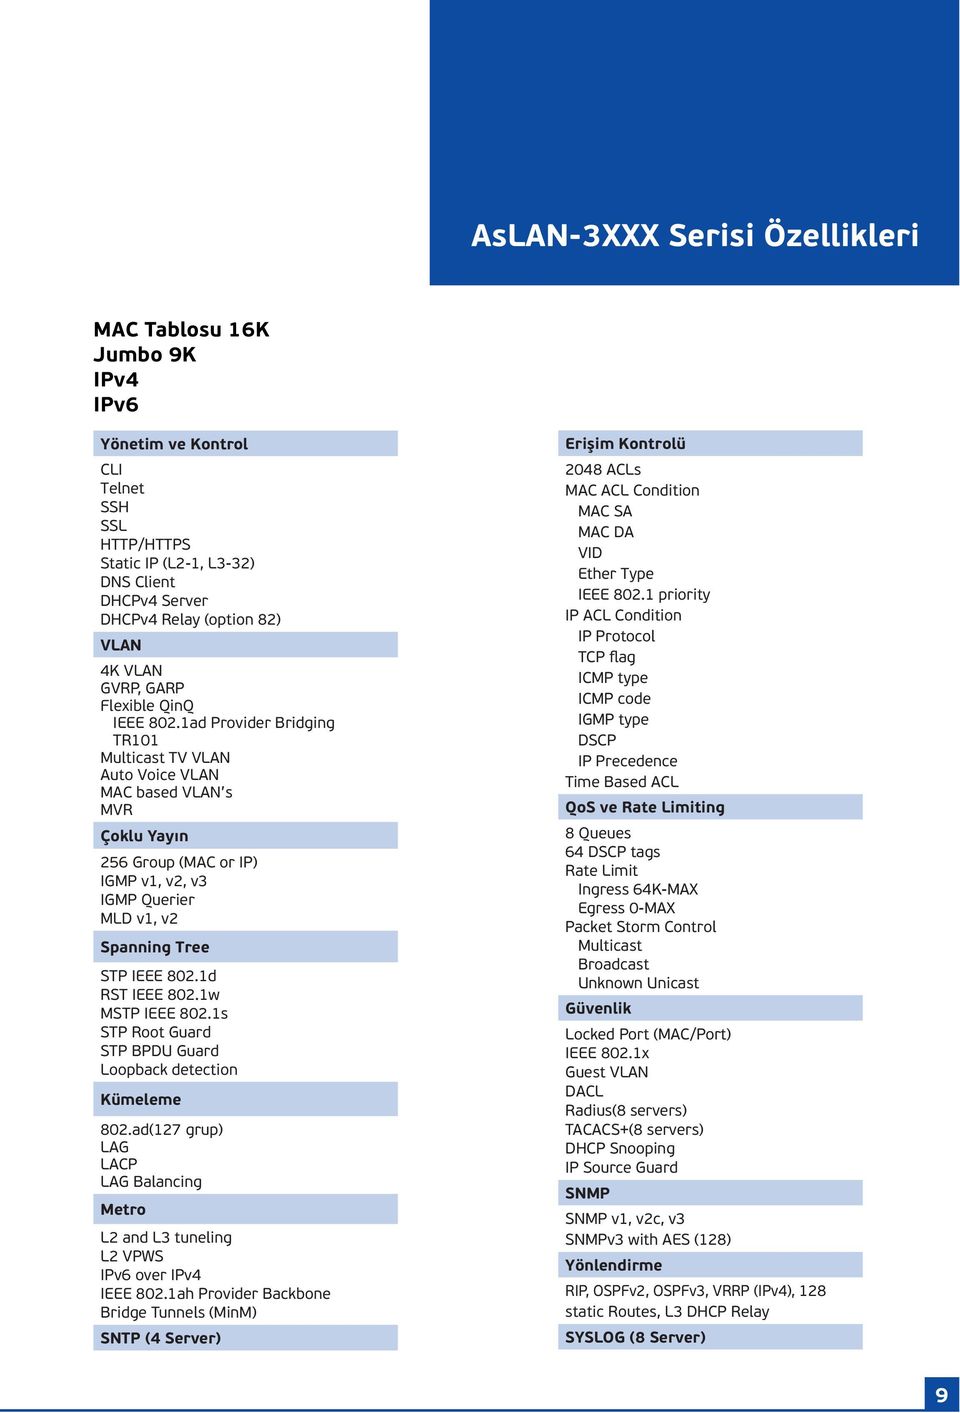 1ad Provider Bridging TR101 Multicast TV VLAN Auto Voice VLAN MAC based VLAN s MVR Çoklu Yayın 256 Group (MAC or IP) IGMP v1, v2, v3 IGMP Querier MLD v1, v2 Spanning Tree STP IEEE 802.1d RST IEEE 802.